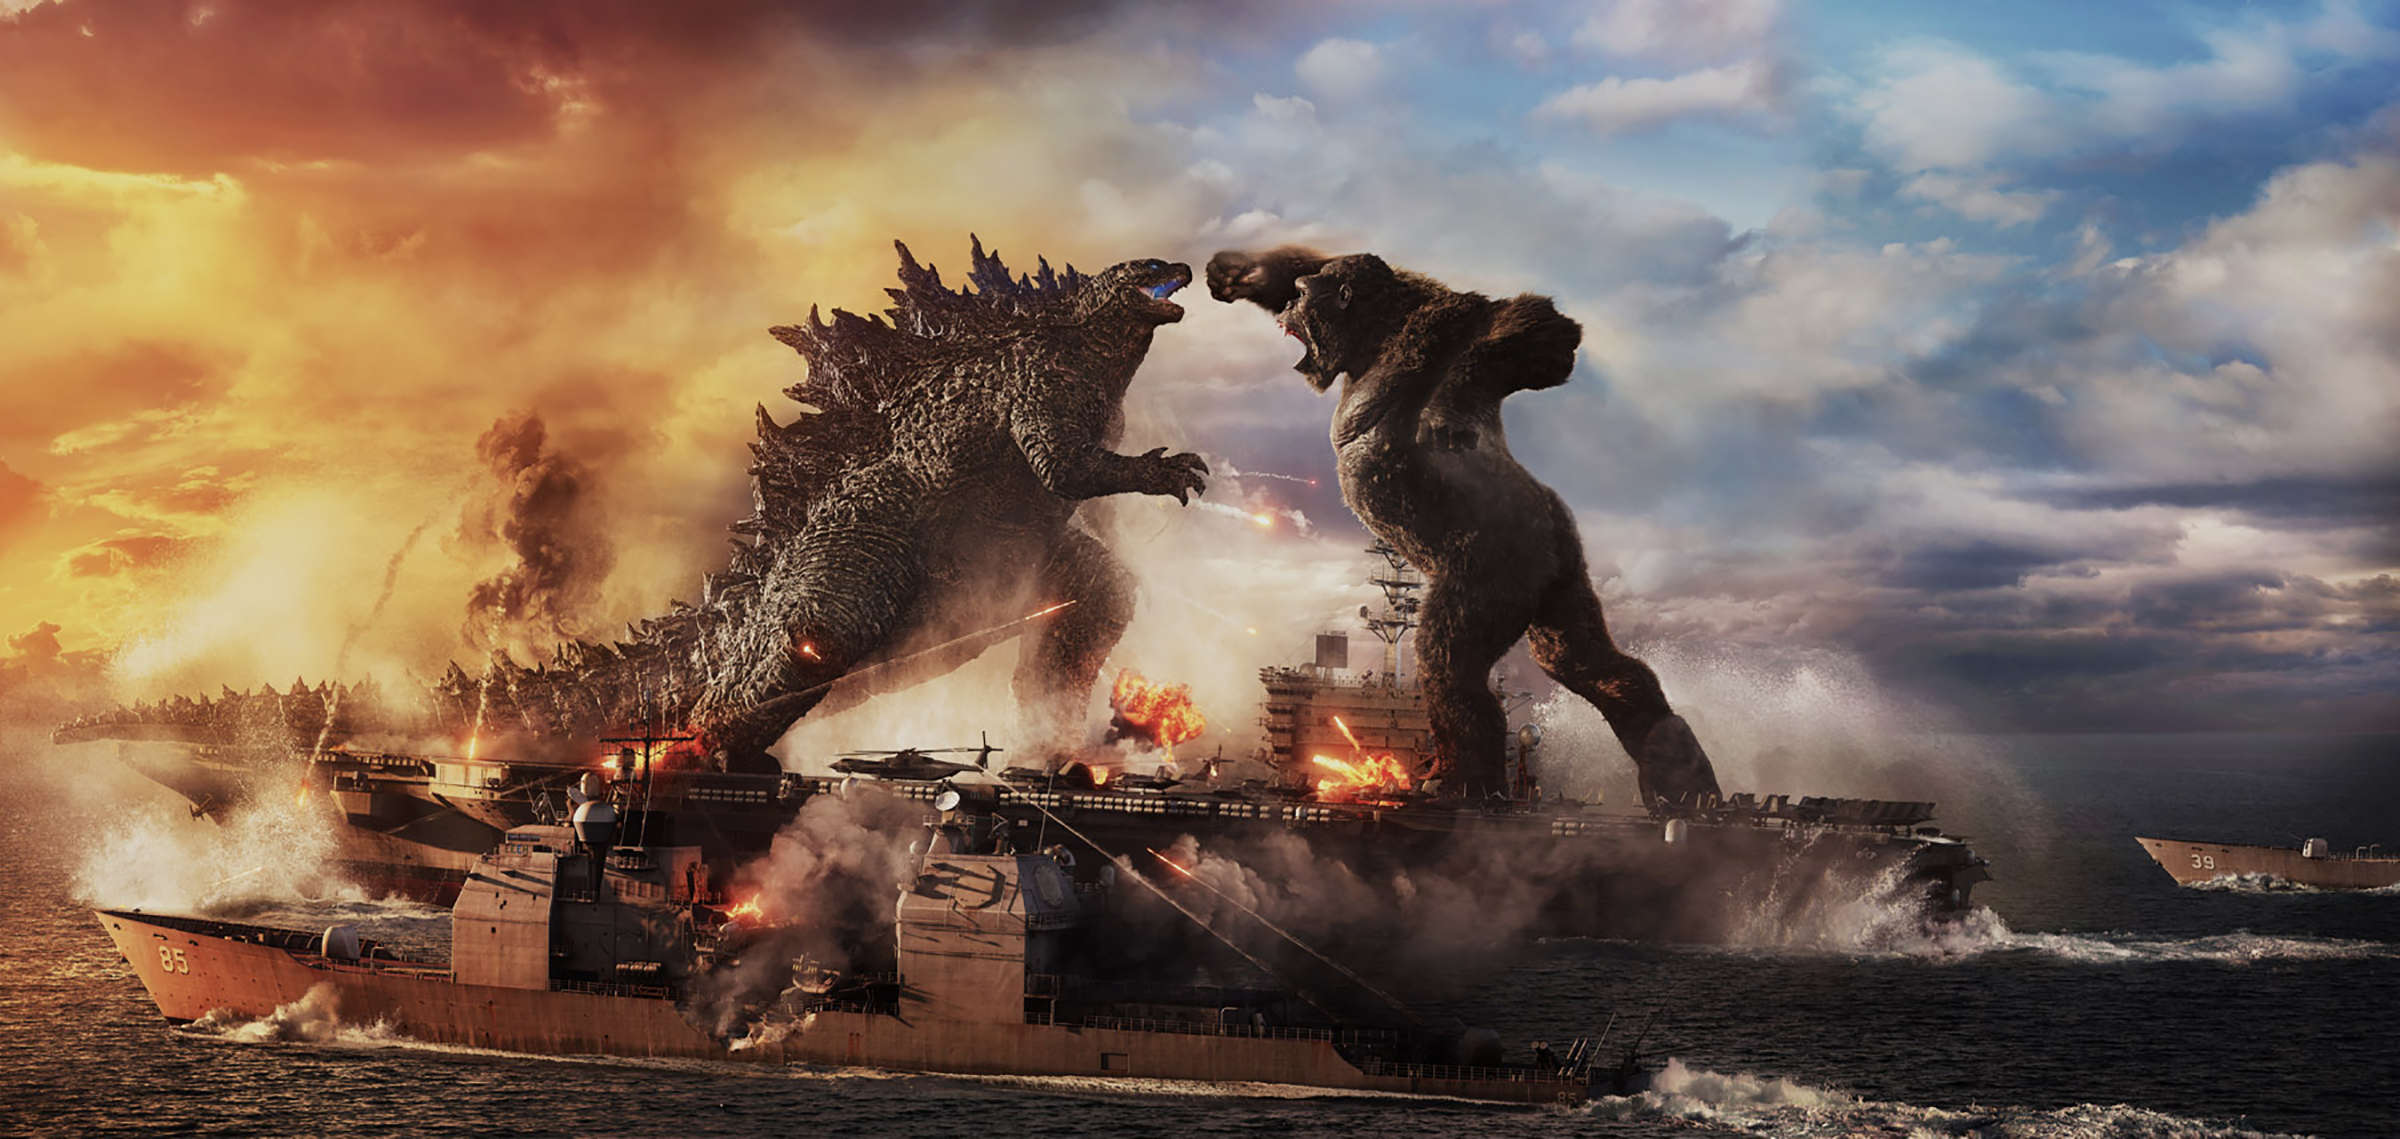 King Kong did Godzilla vs. Kong's big 'mecha' twist before